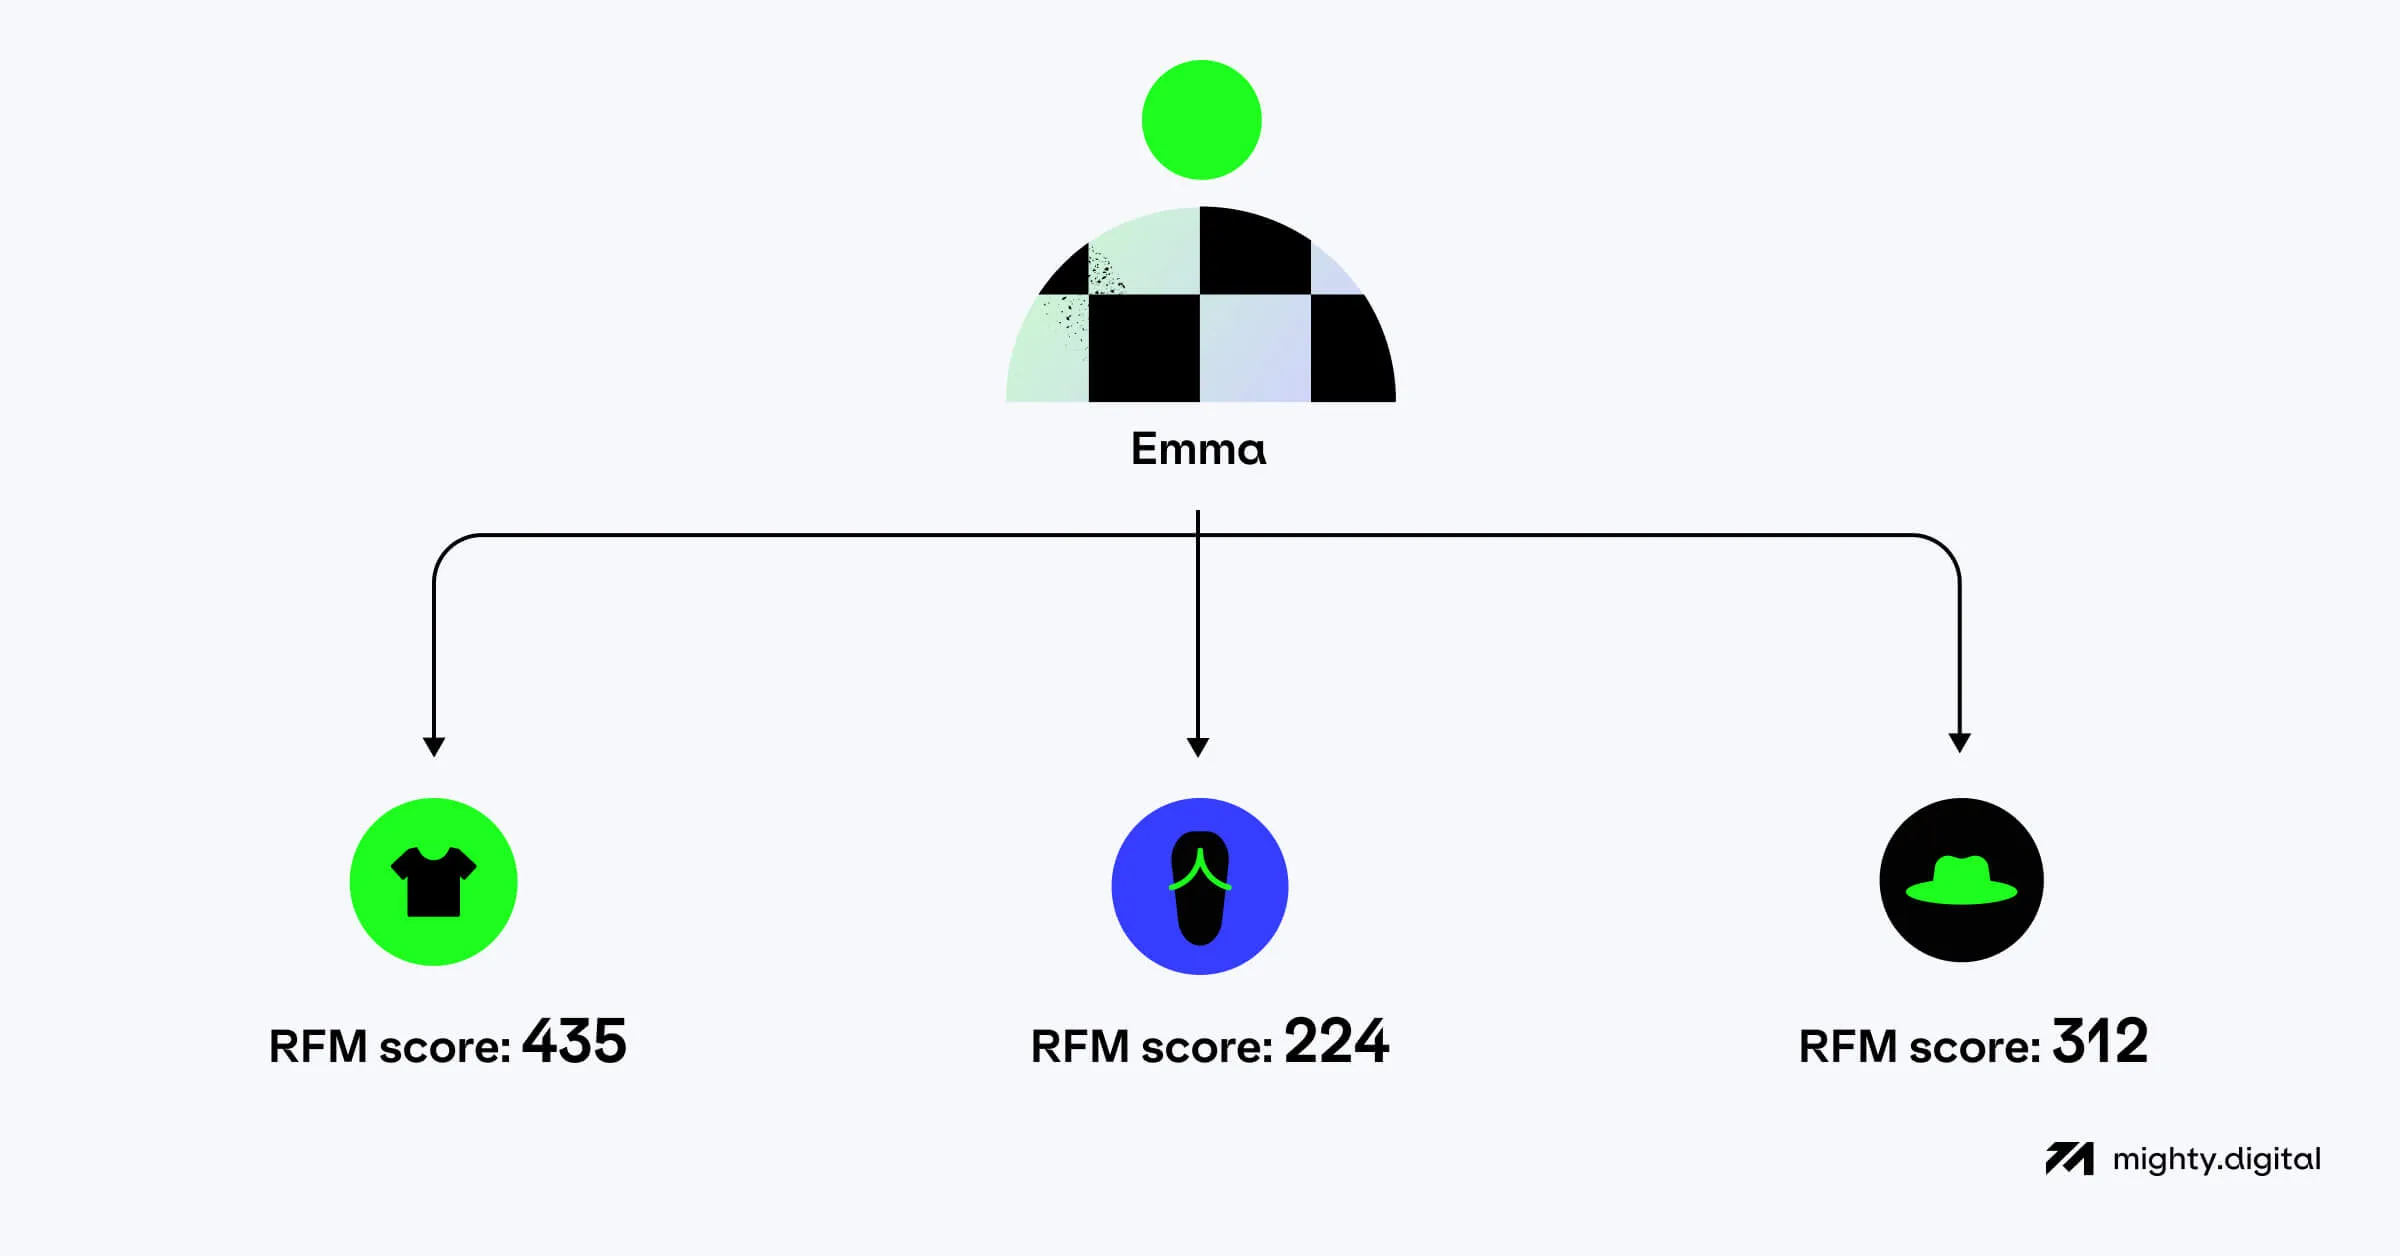 RFM scores